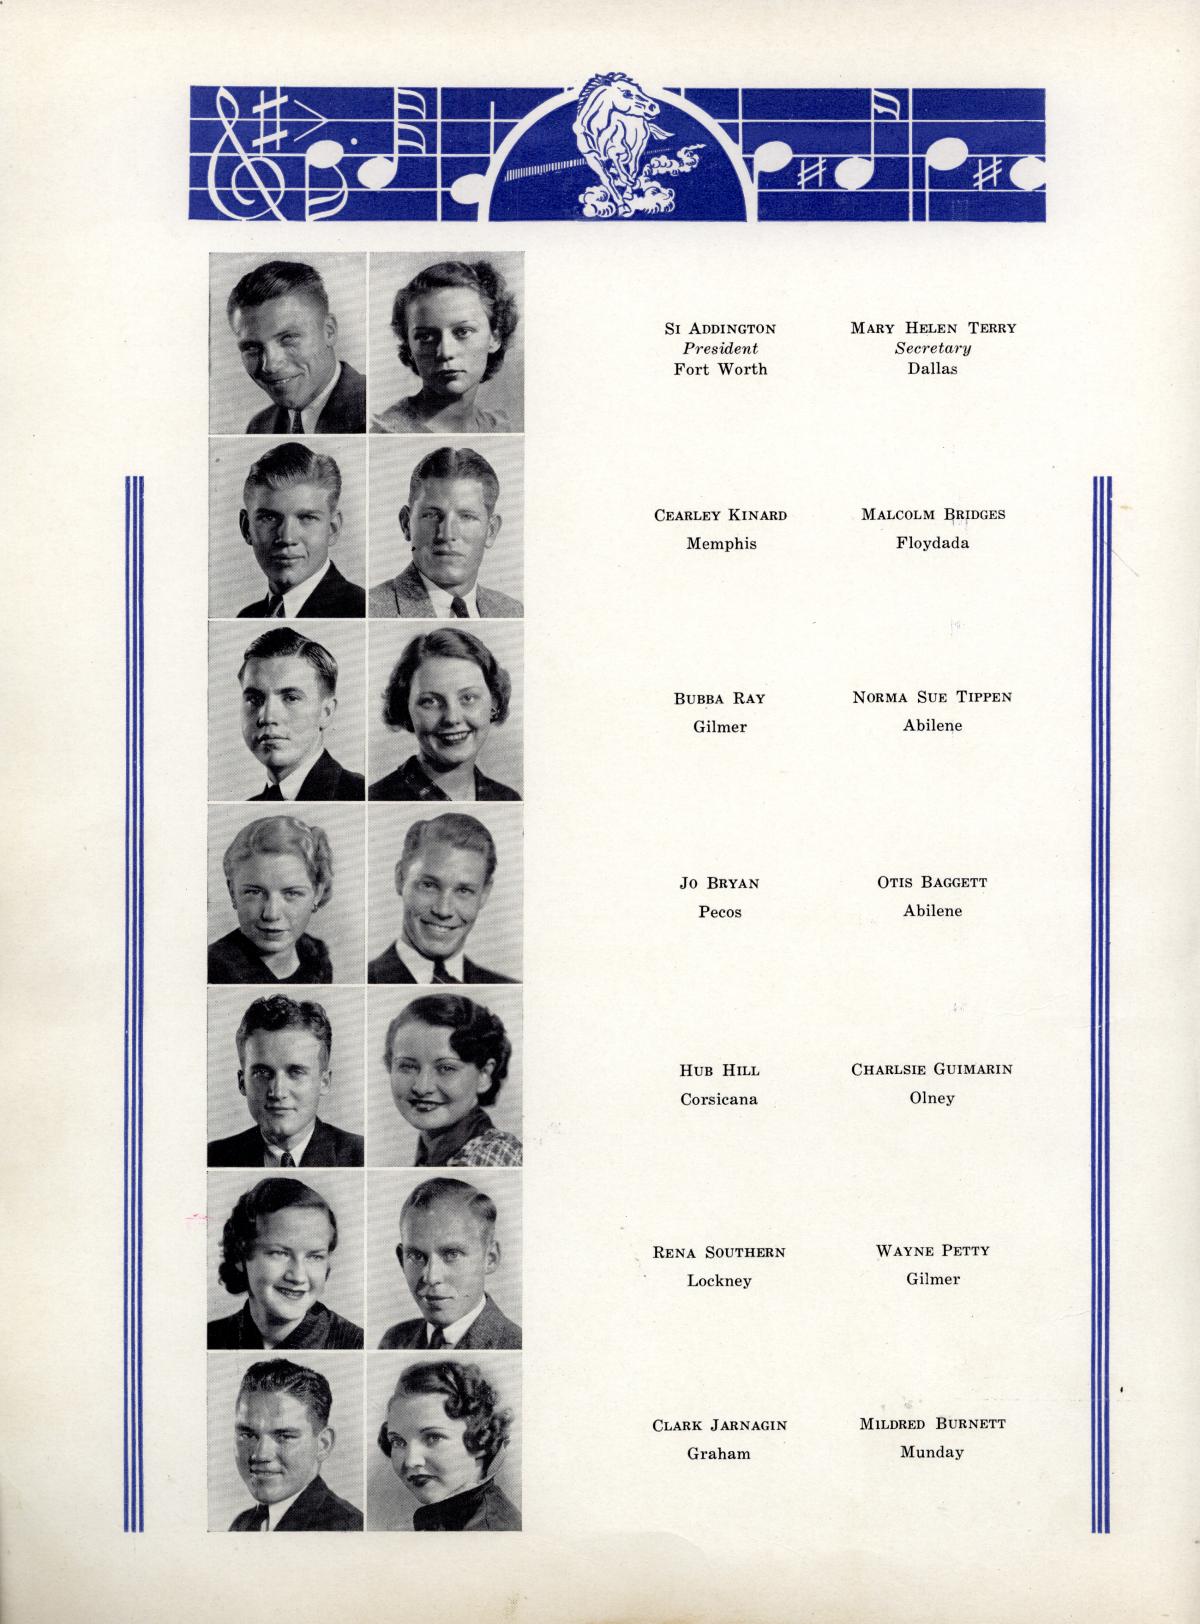 The Bronco, Yearbook of Hardin-Simmons University, 1935
                                                
                                                    52
                                                